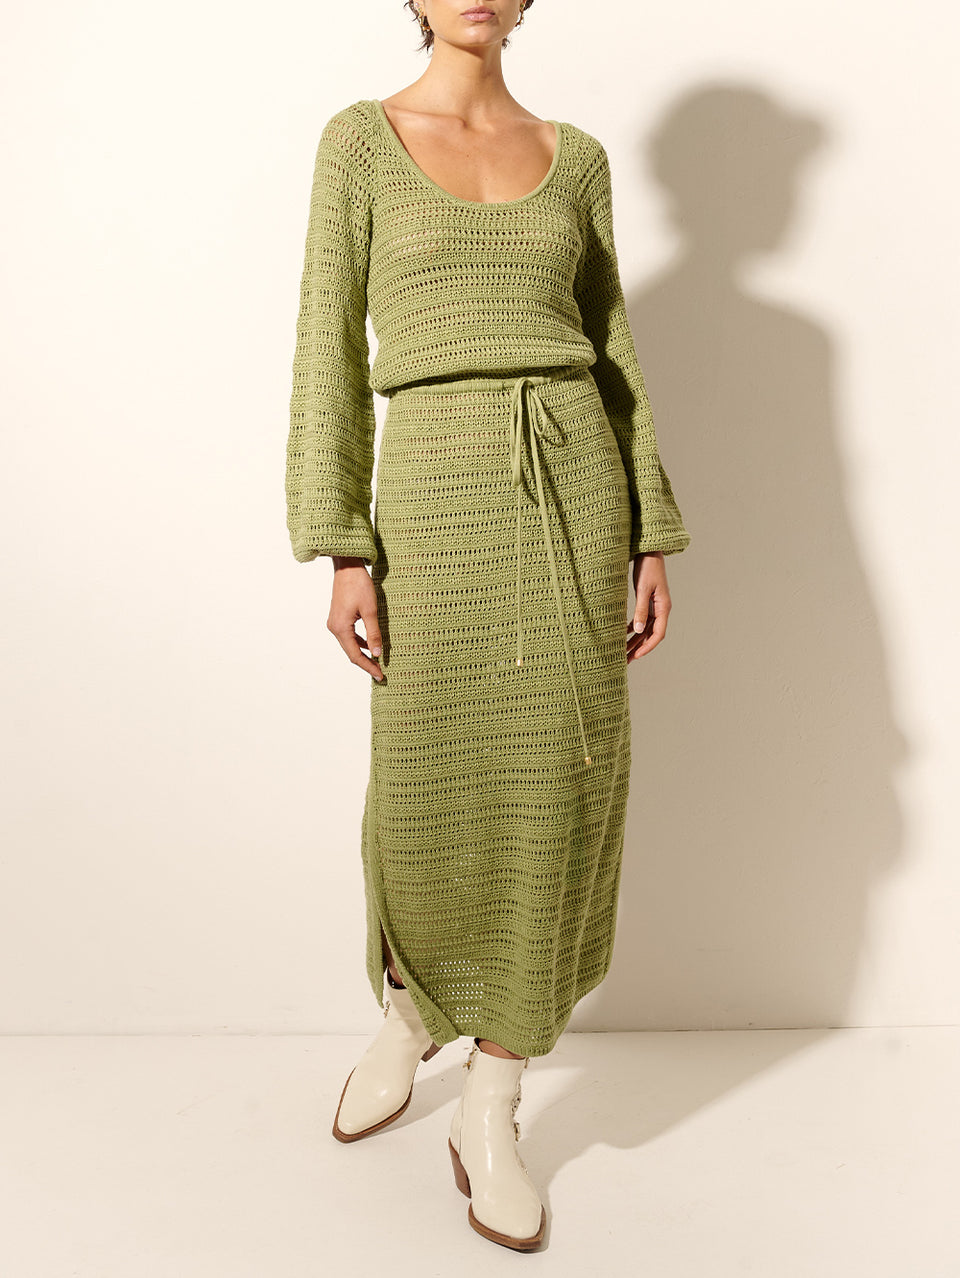 Pepe Knit Dress Avocado KIVARI | Model wears avocado green knit maxi dress